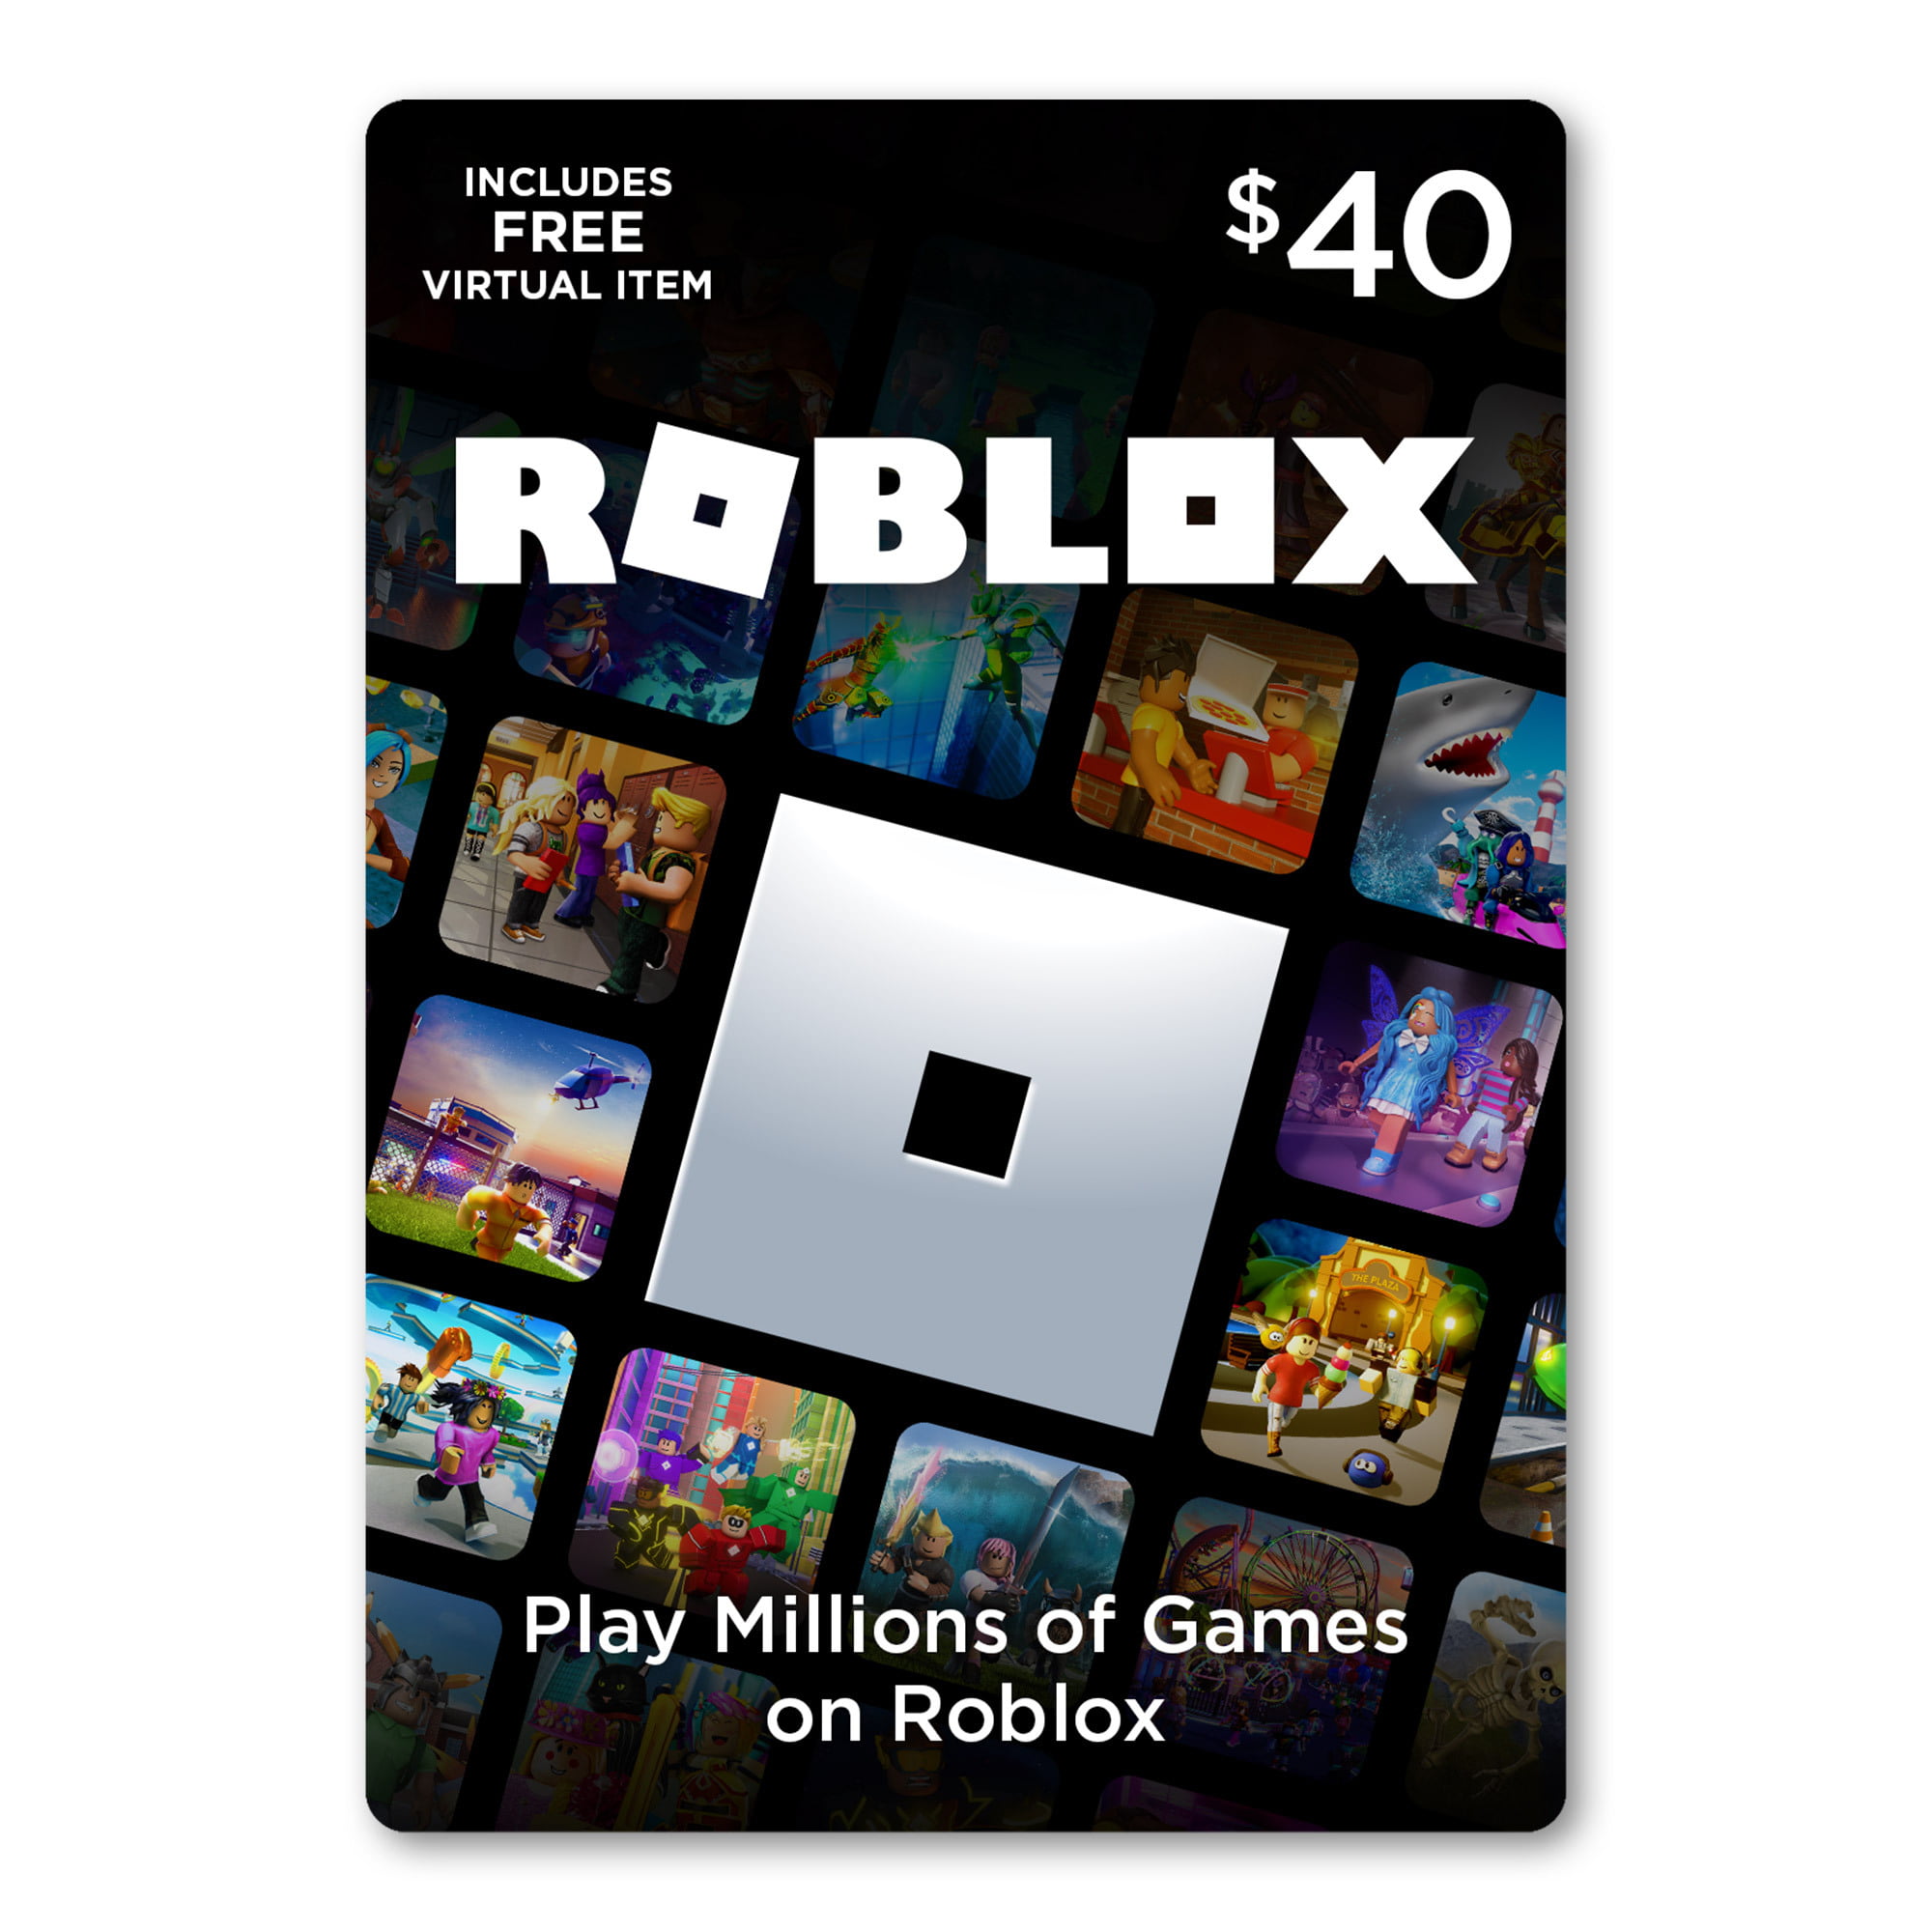 Roblox 40 Digital Gift Card Includes Exclusive Virtual Item Digital Download Walmart Com Walmart Com - 40 roblox card